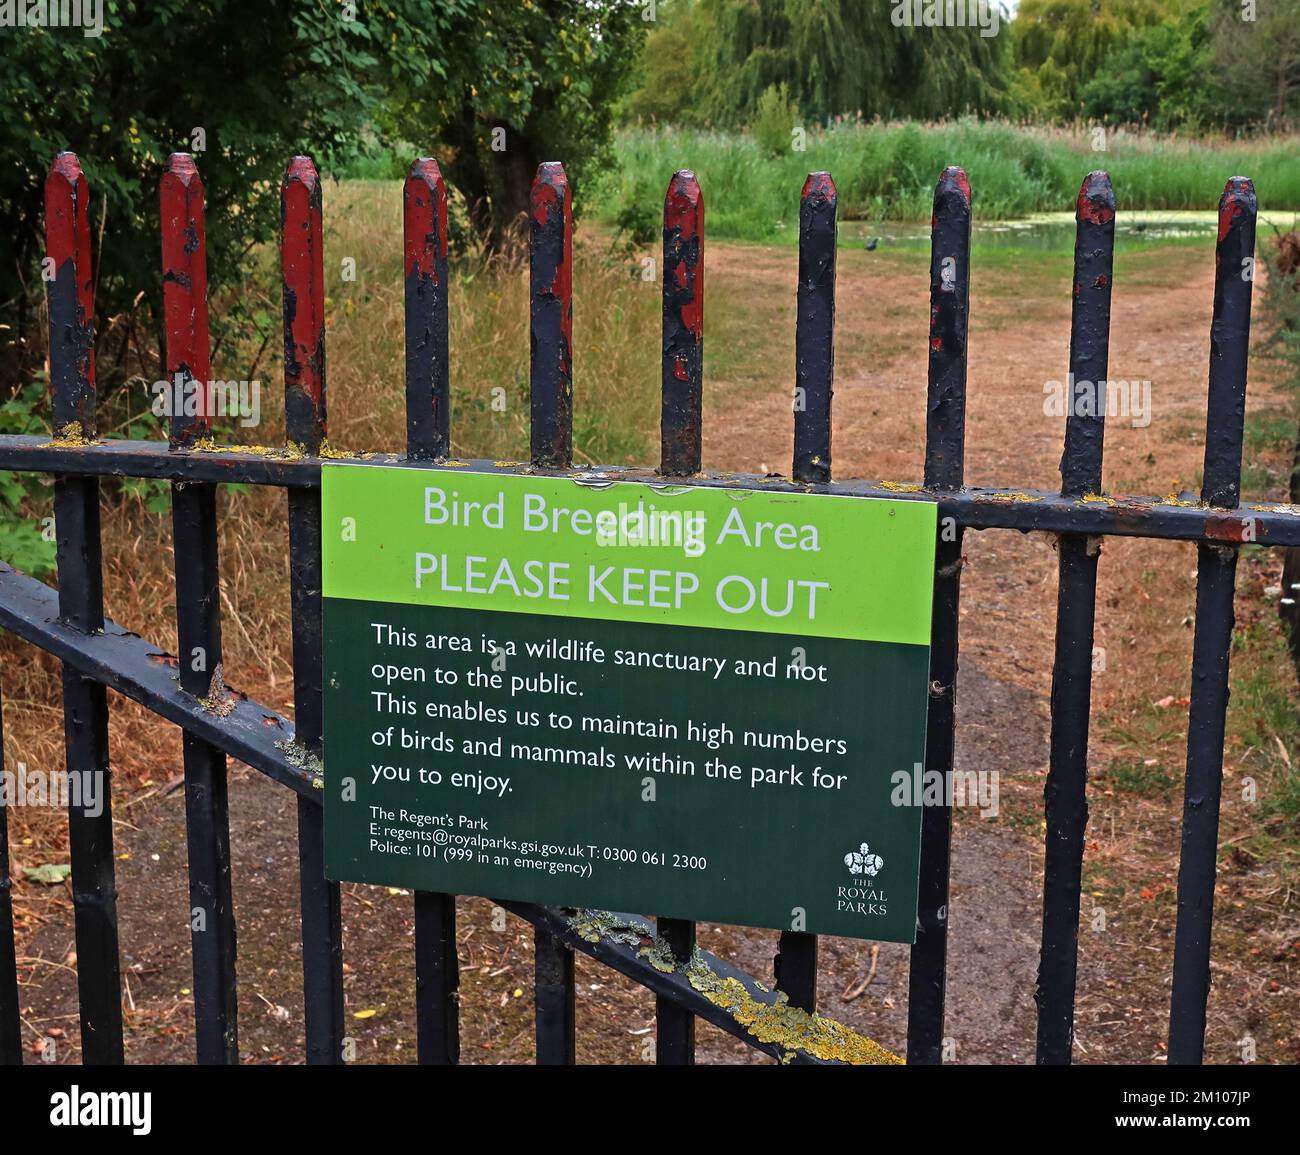 Fenced off area, Royal Parks Bird breeding area, Regents Park, London, England, UK, NW1 - green sign Stock Photo